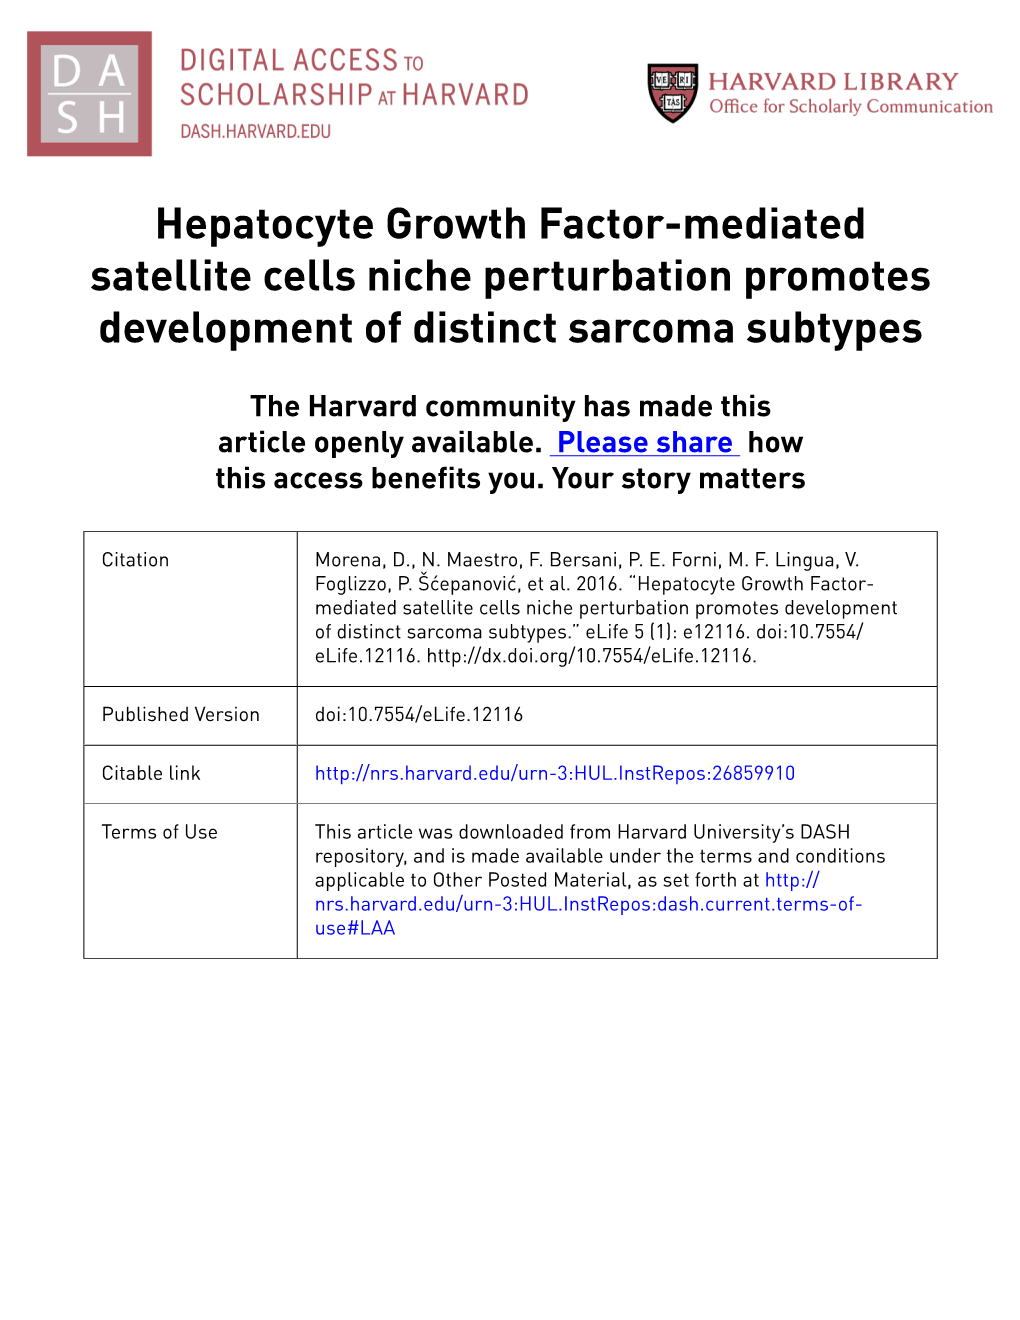 Hepatocyte Growth Factor-Mediated Satellite Cells Niche Perturbation Promotes Development of Distinct Sarcoma Subtypes